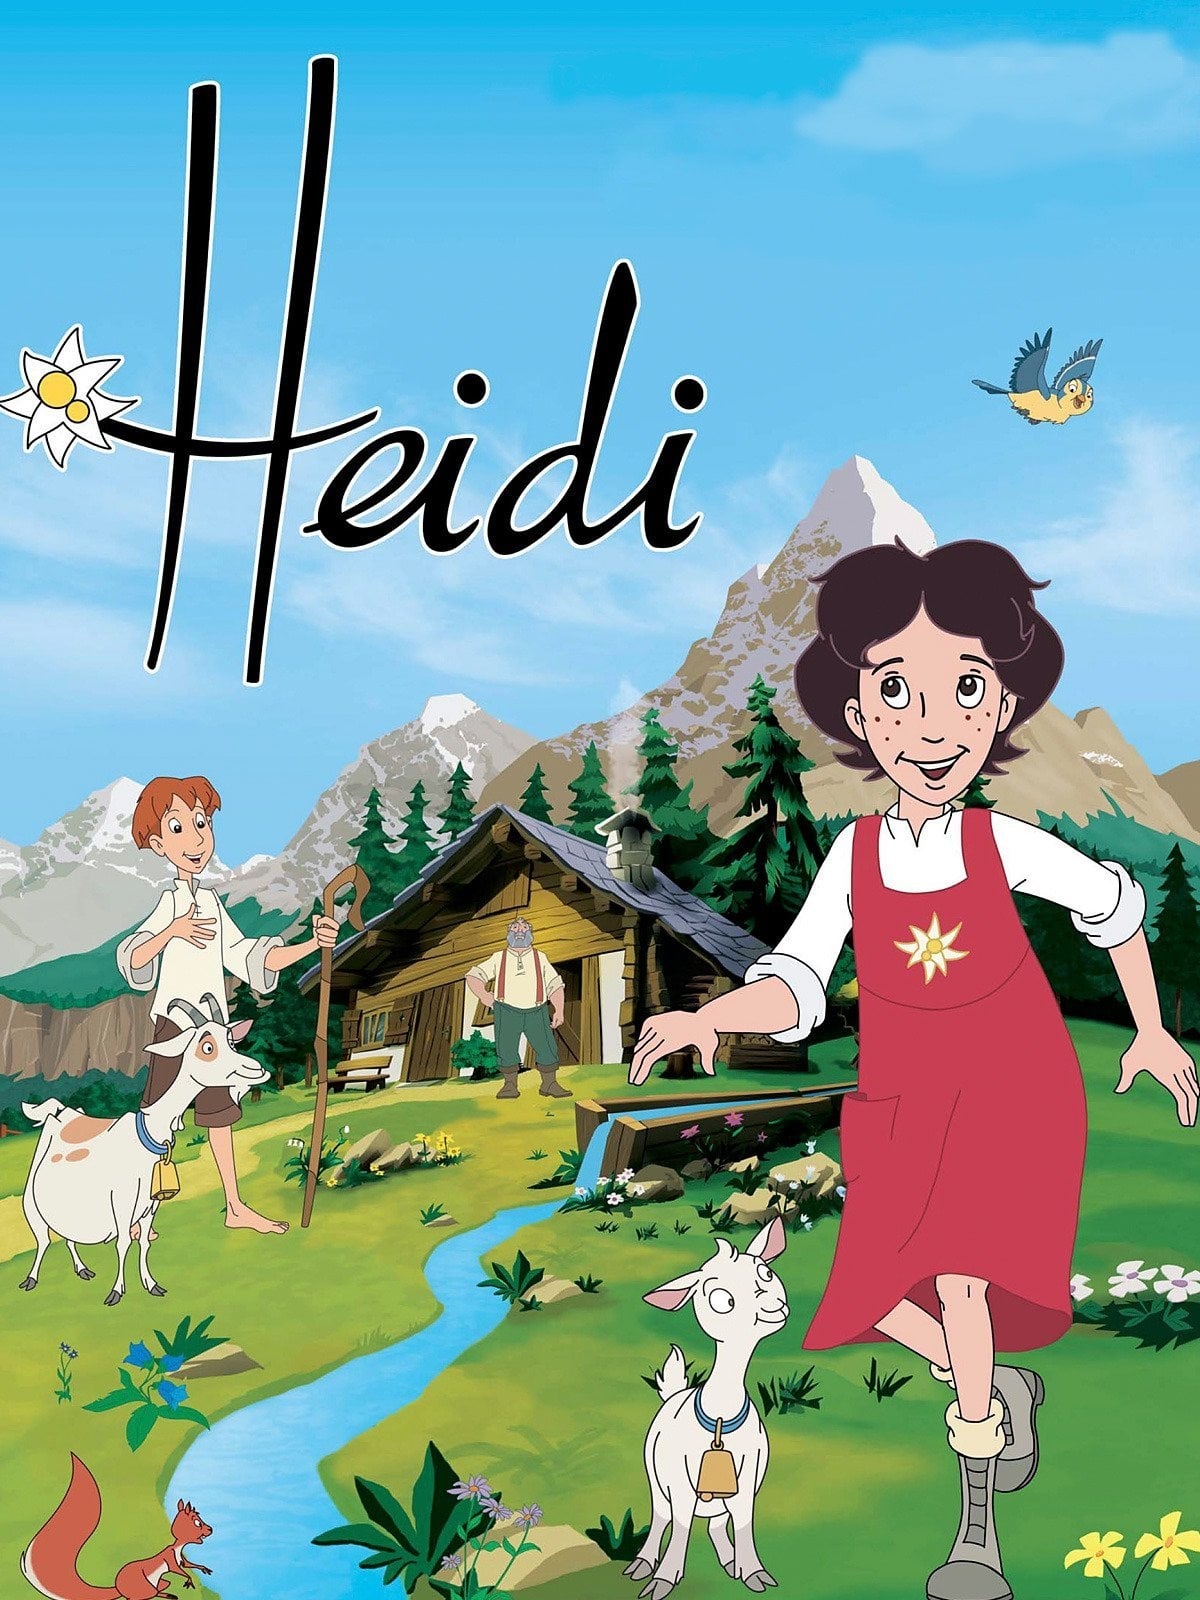 Heidi (2005)